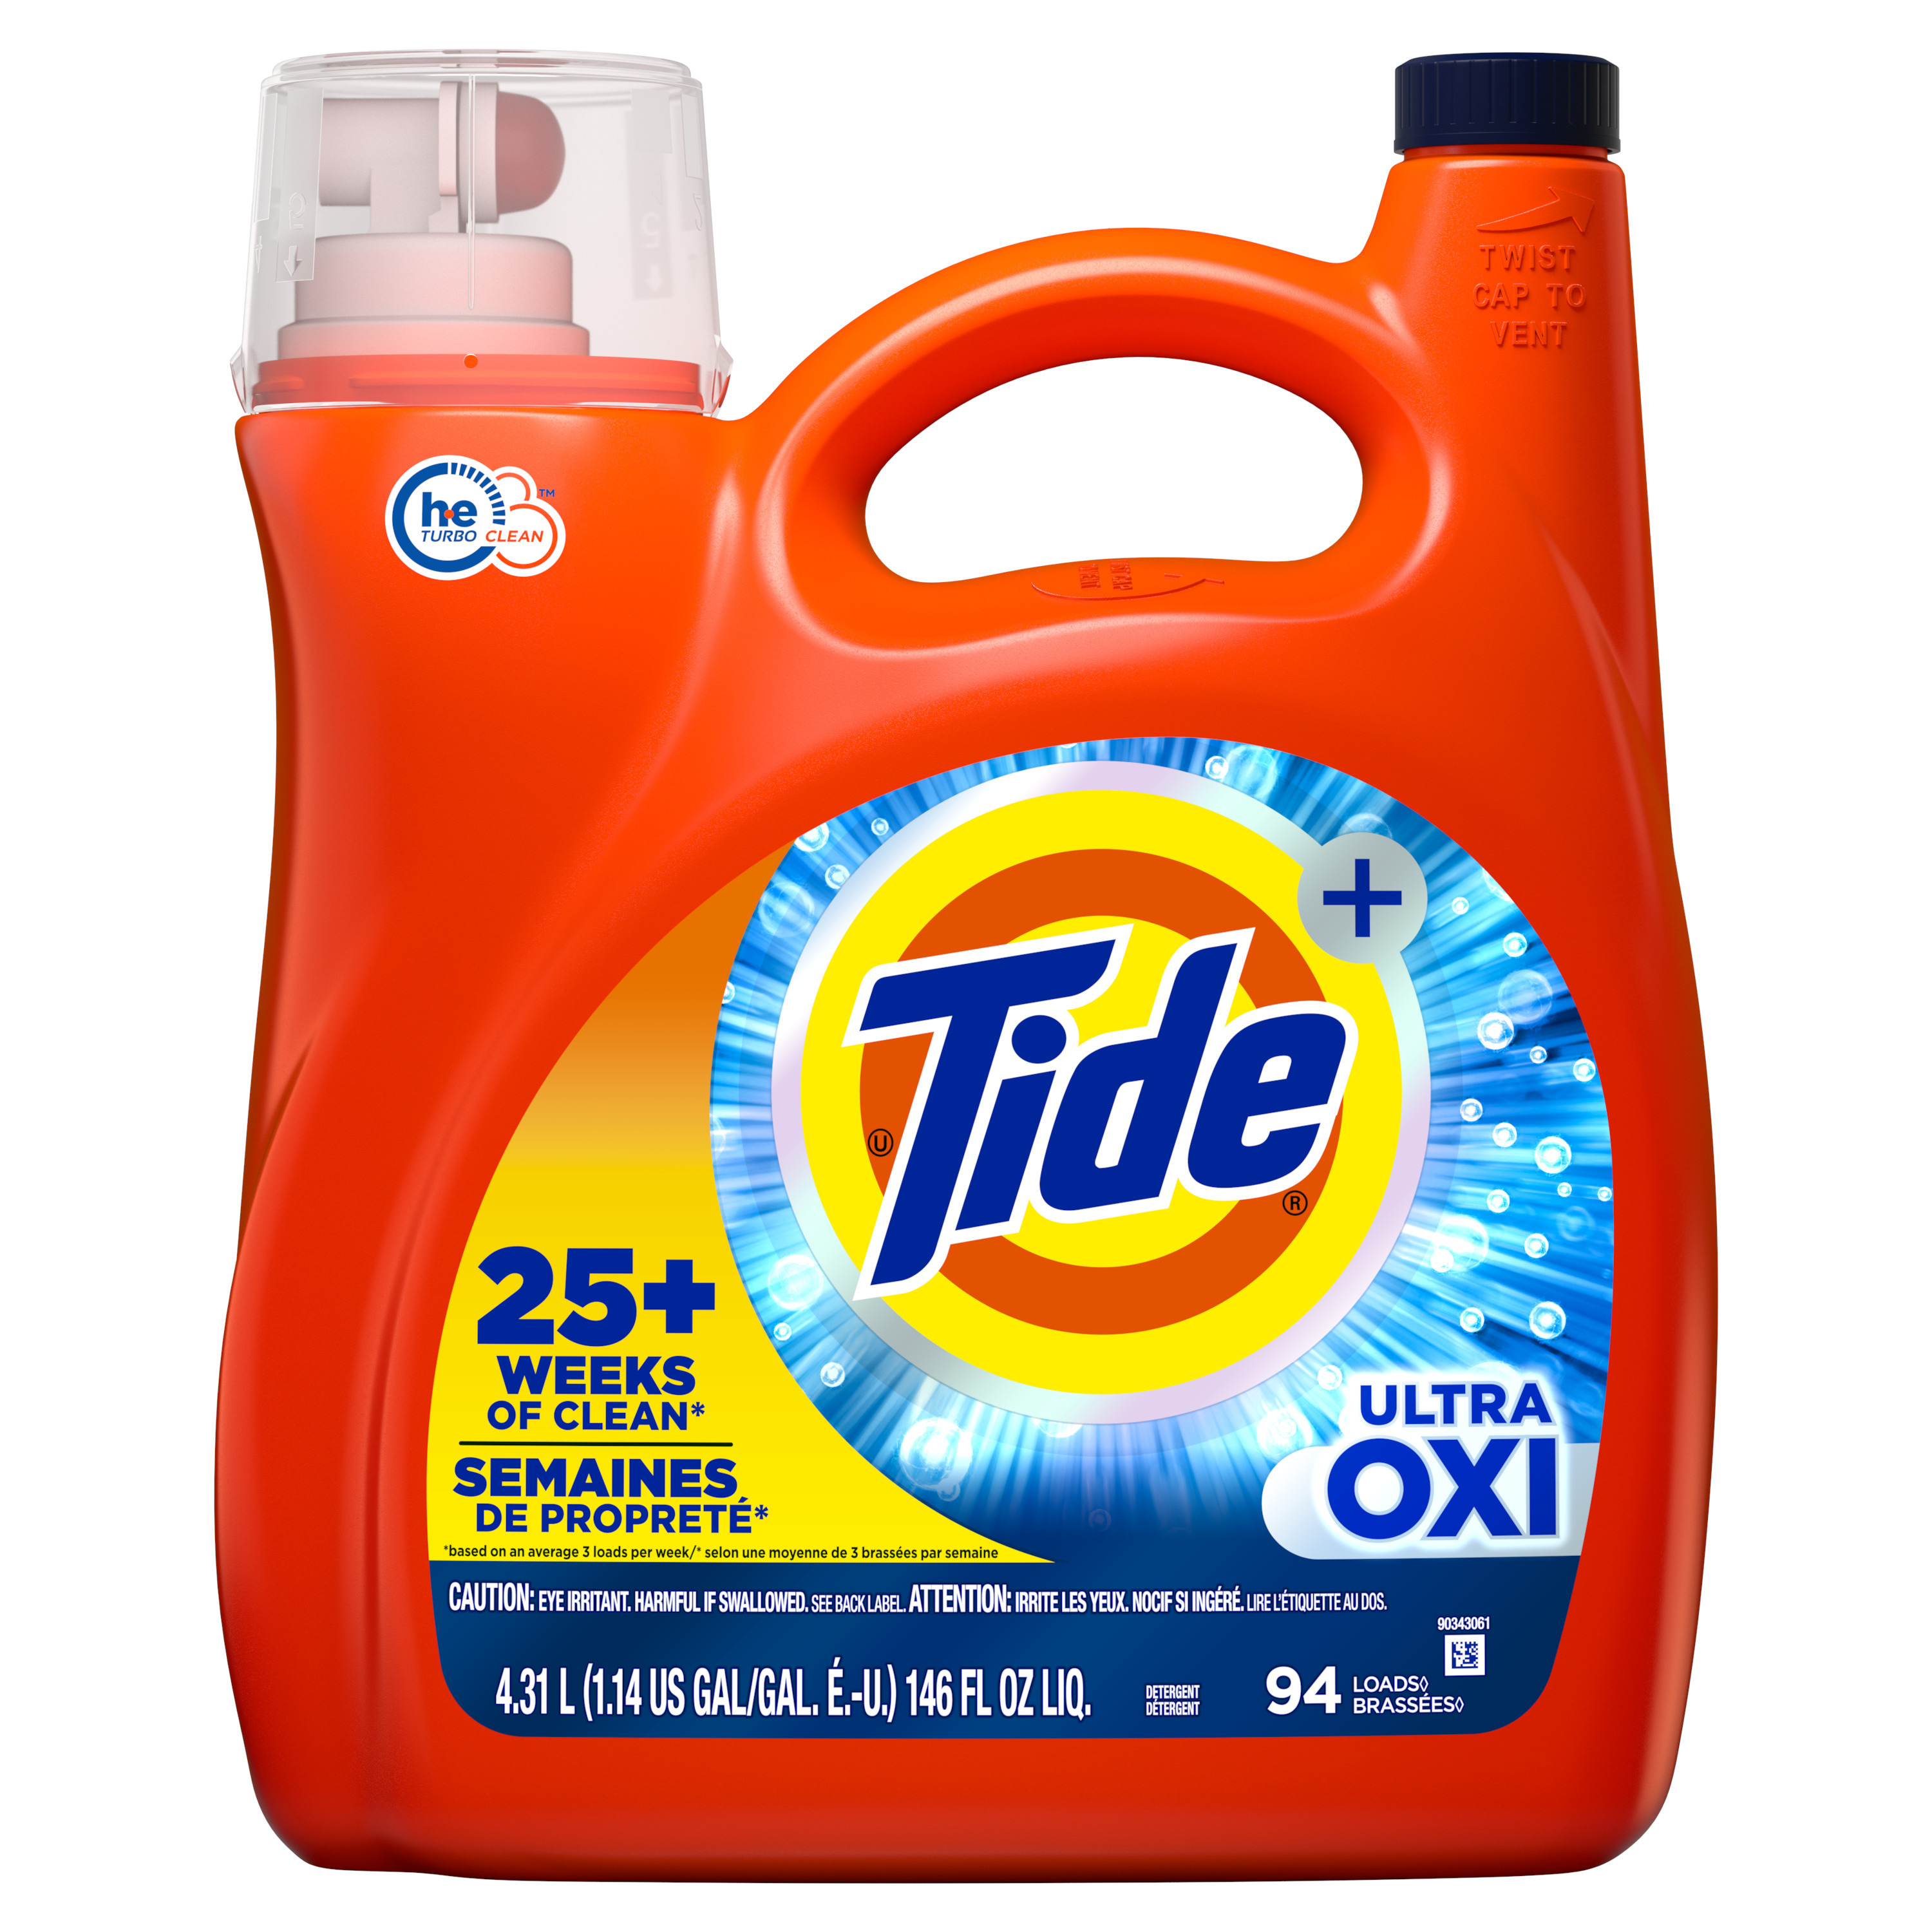 Tide Ultra Oxi Liquid Laundry Detergent, 94 Loads, 146 fl oz - image 7 of 8